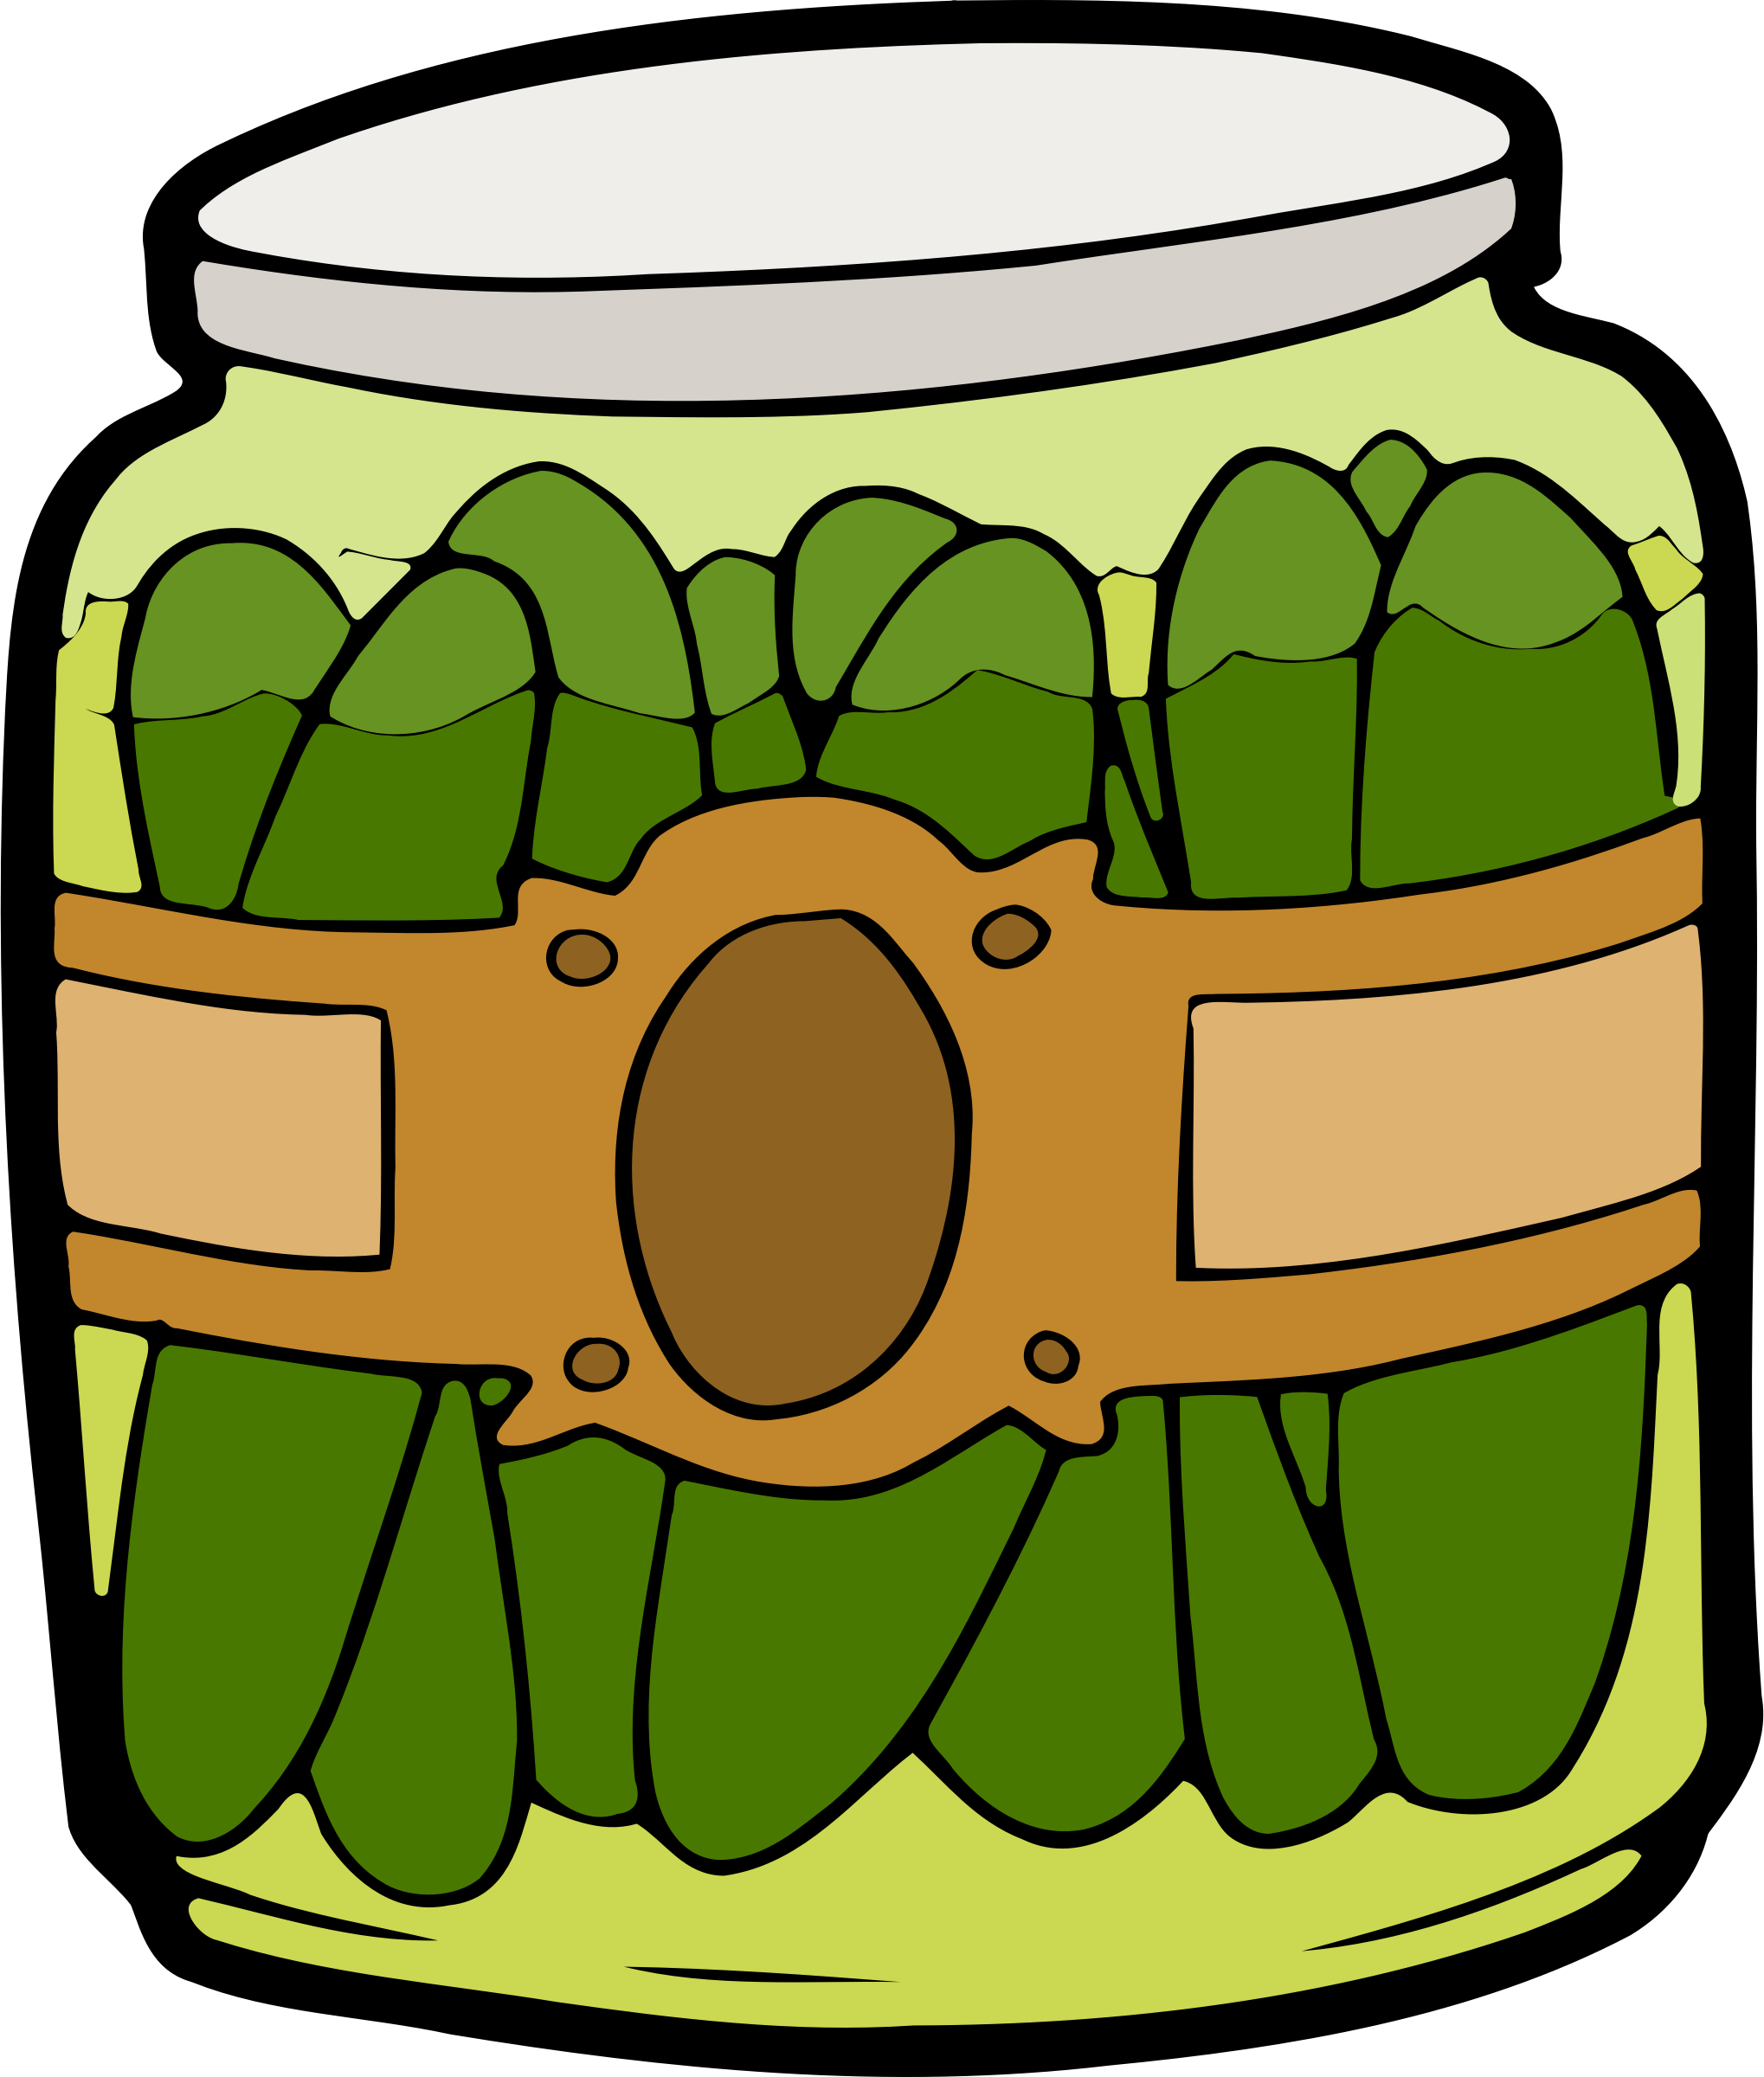 Pickle Jar Clip Art